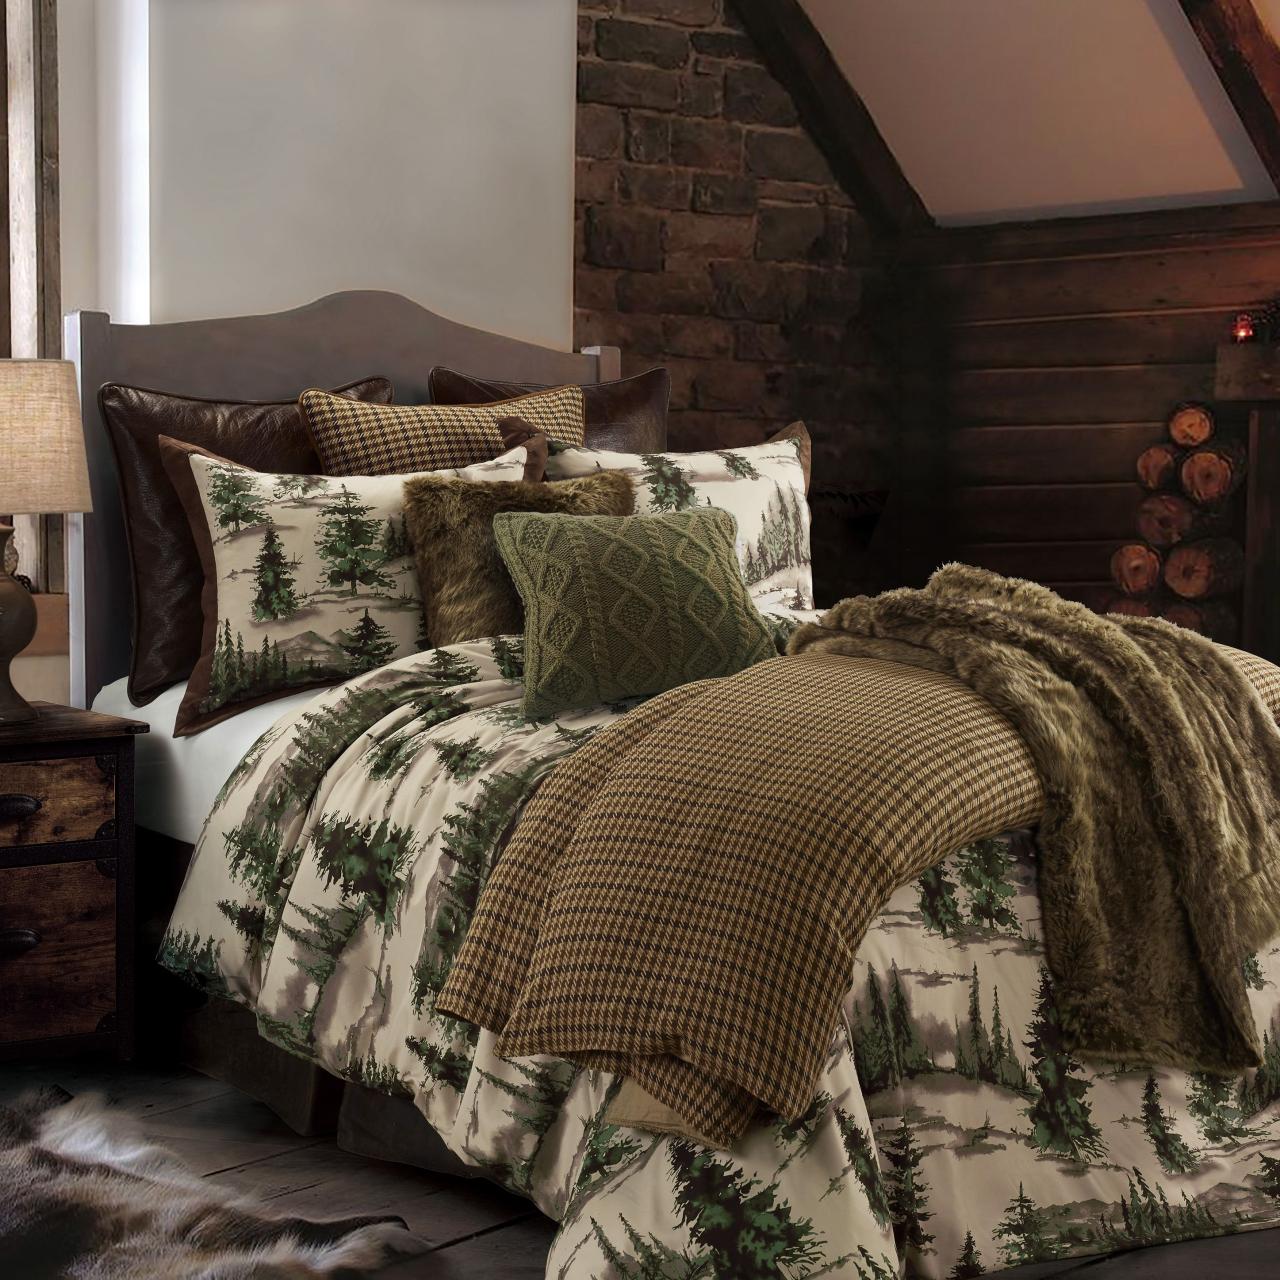 Bedroom red gray retreat mountain rustic interior decorators designers email